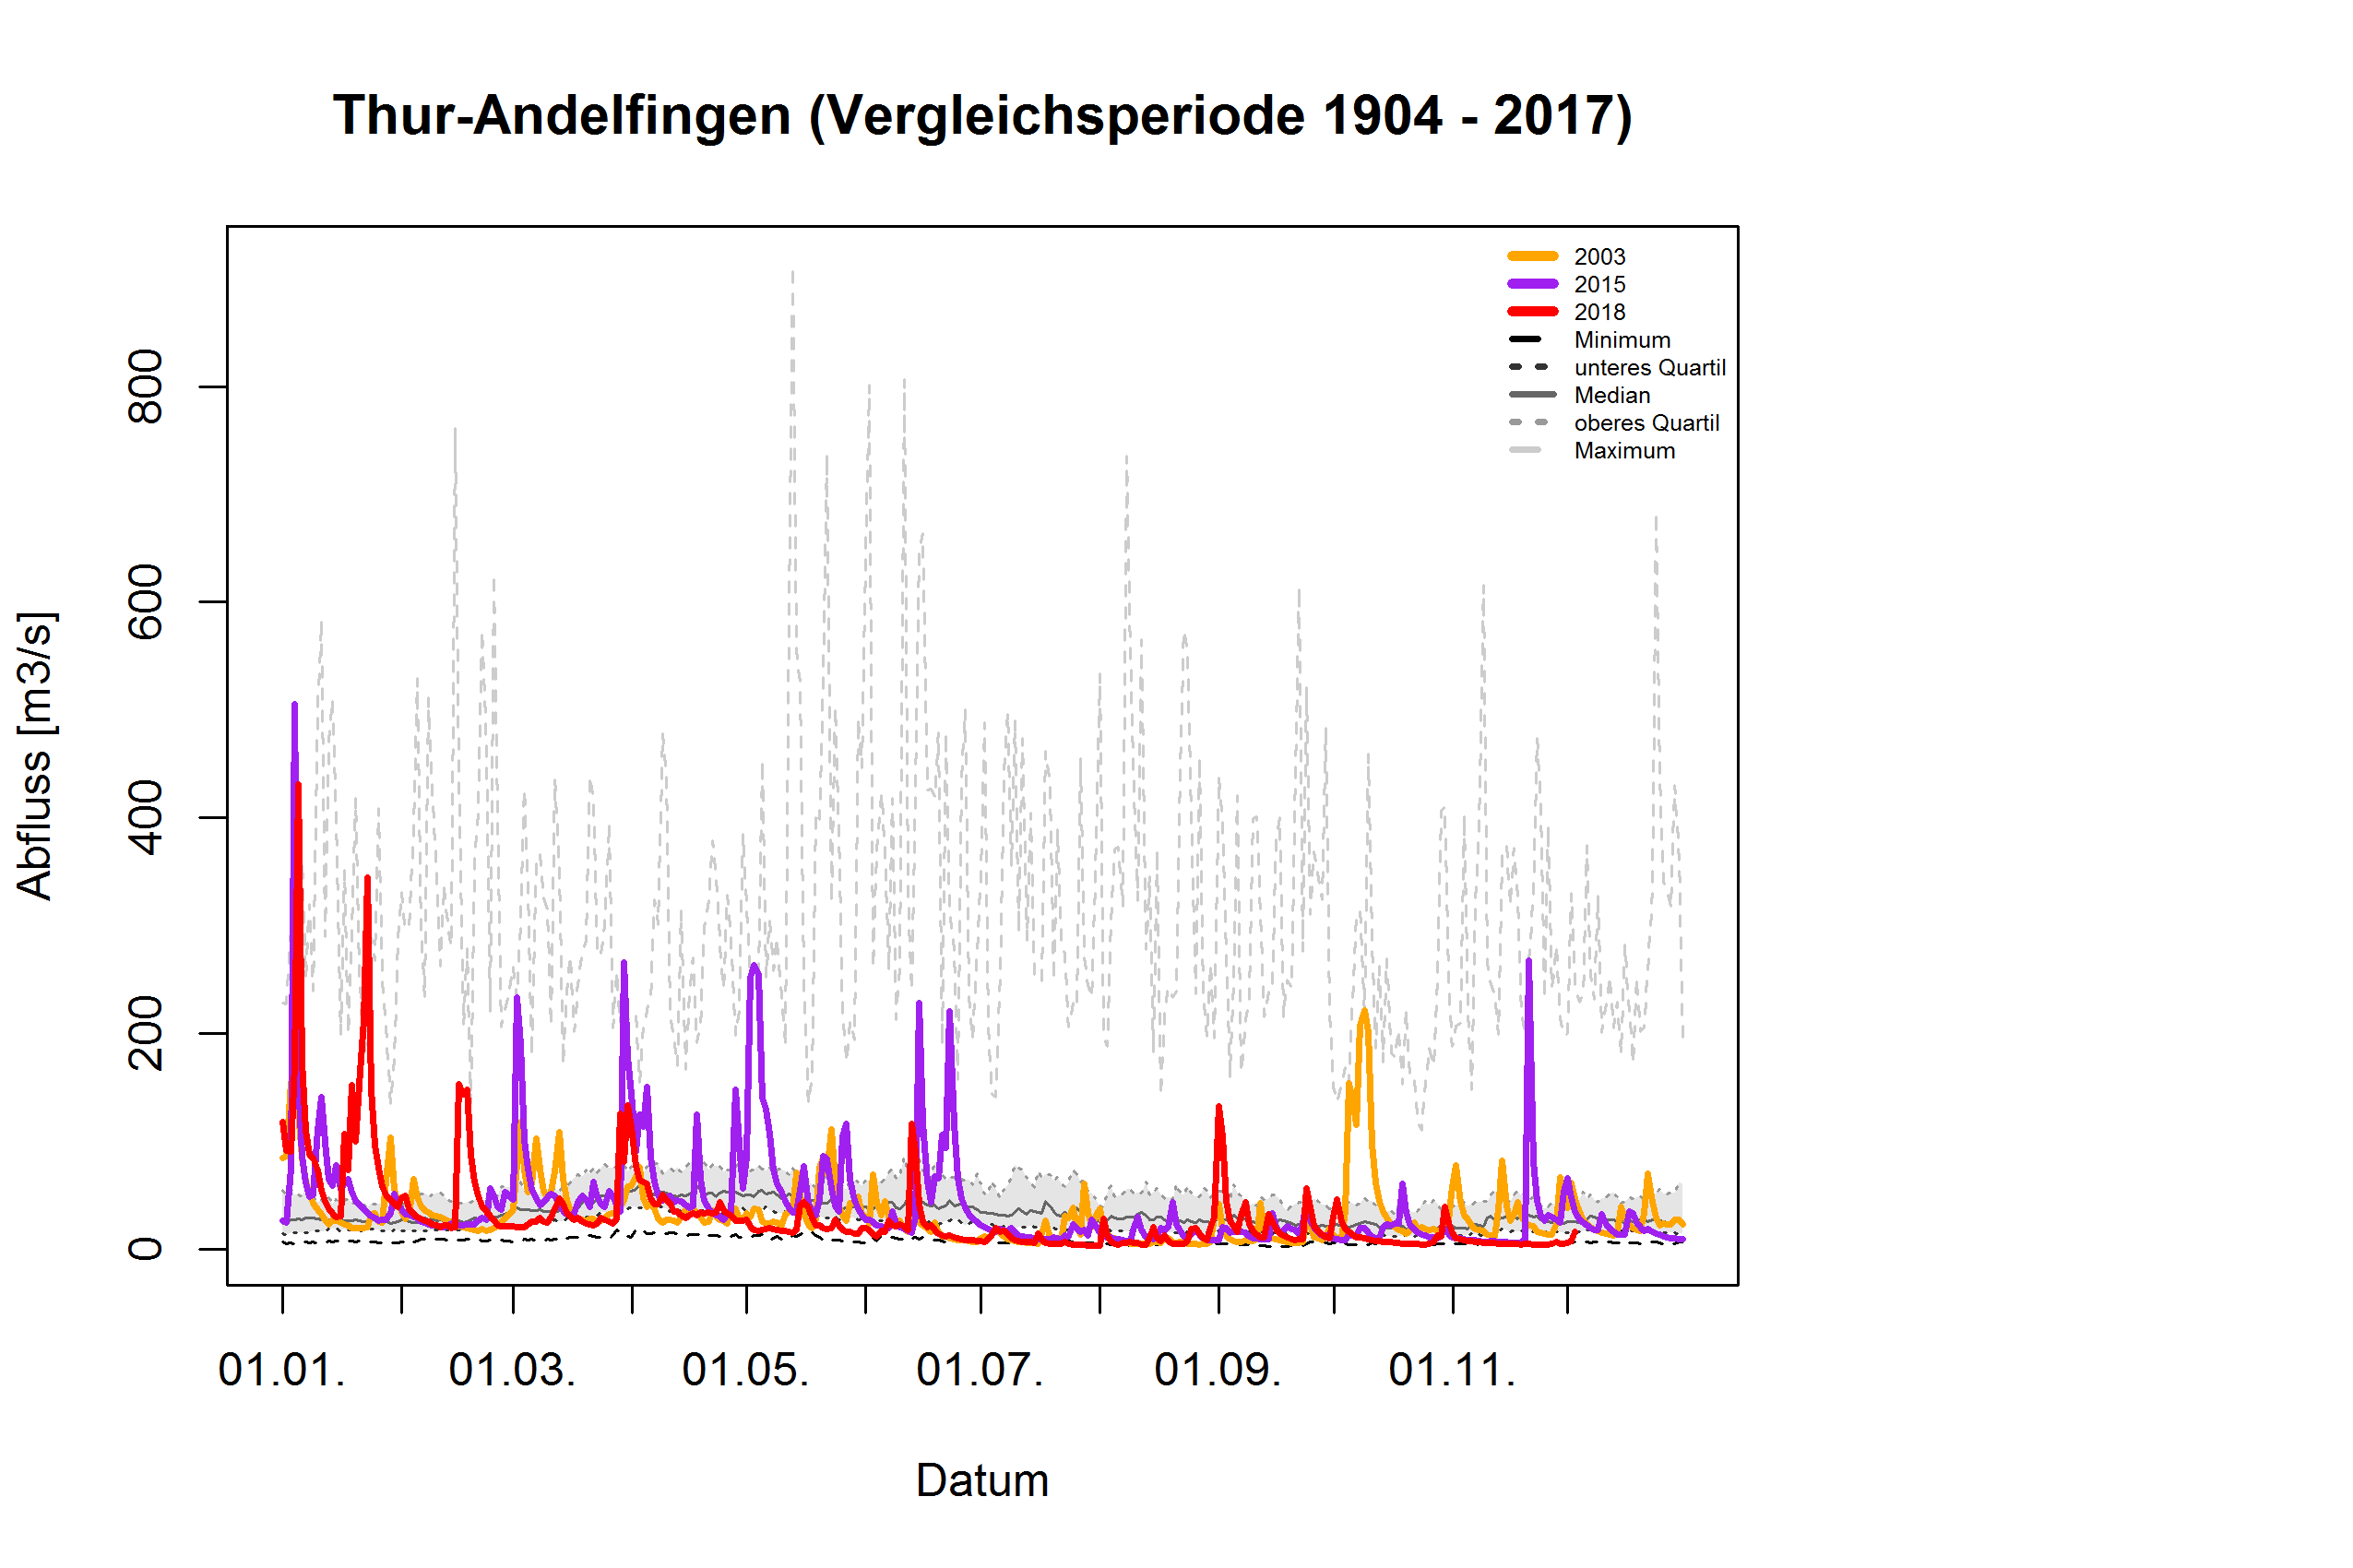 Thur - Andelfingen: Vergleichsperiode 1904 - 2017